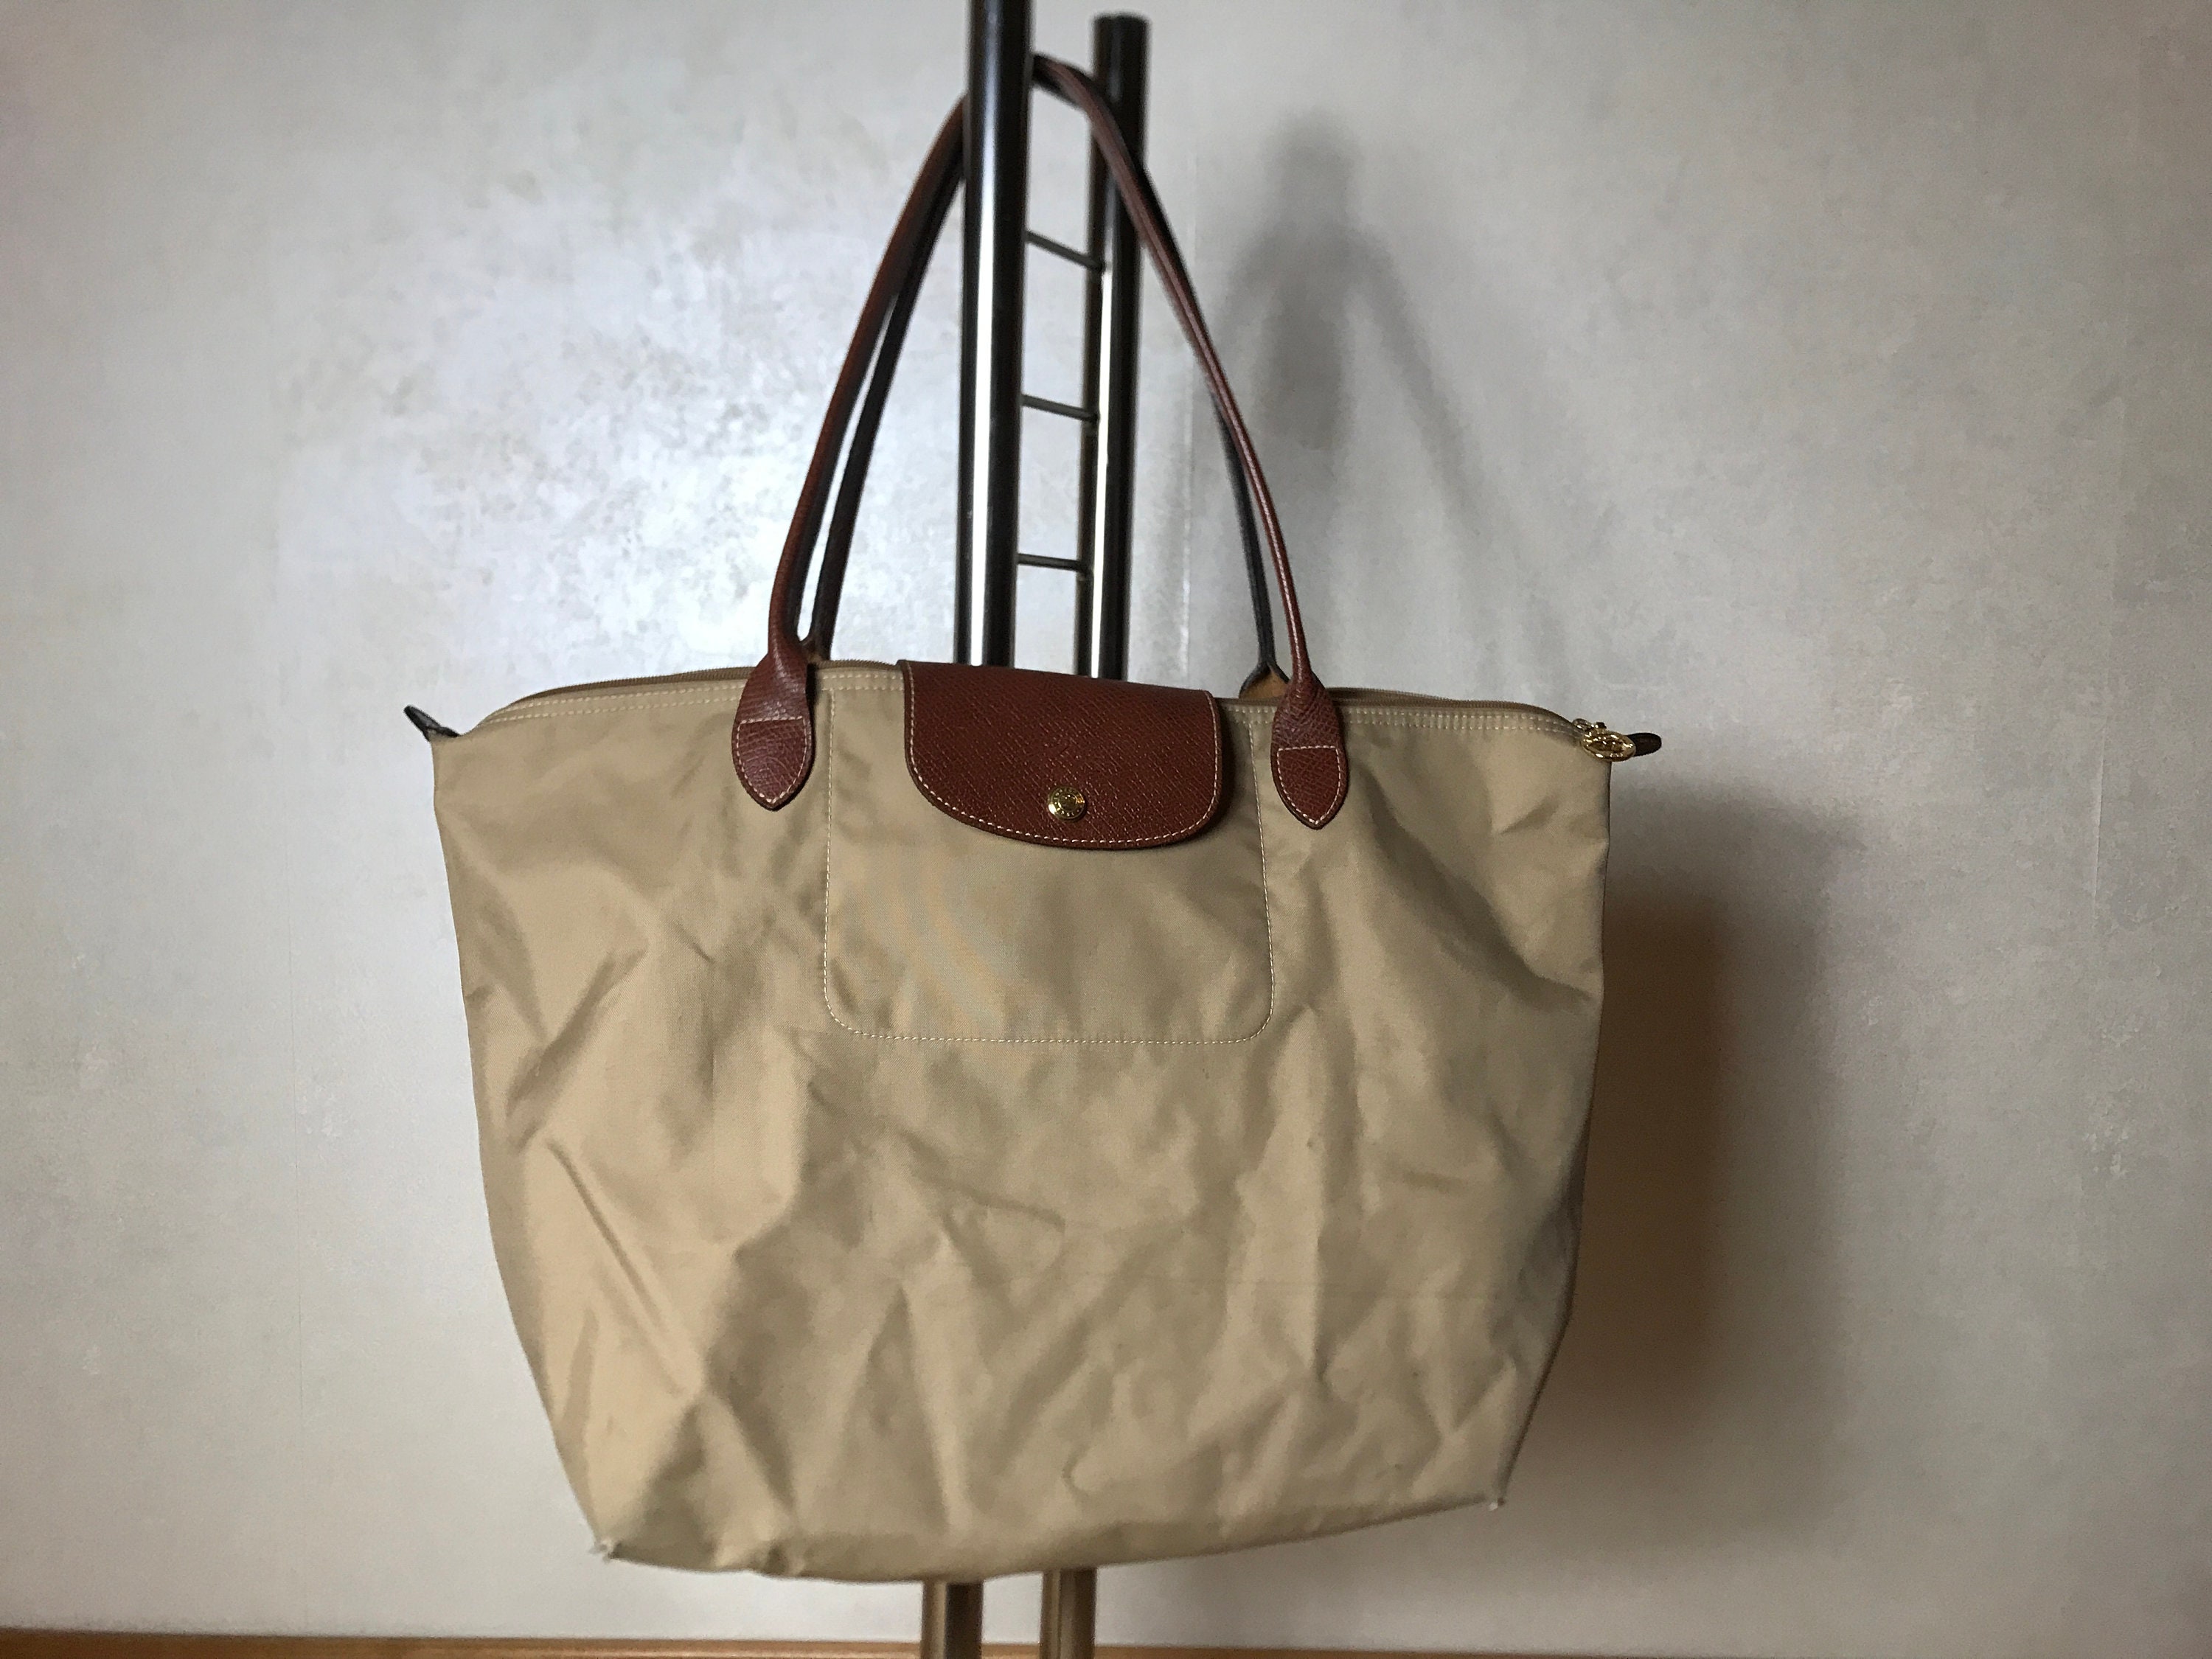 LONGCHAMP Roseau Nylon w/Leather Trim Tote Handbag in Beige